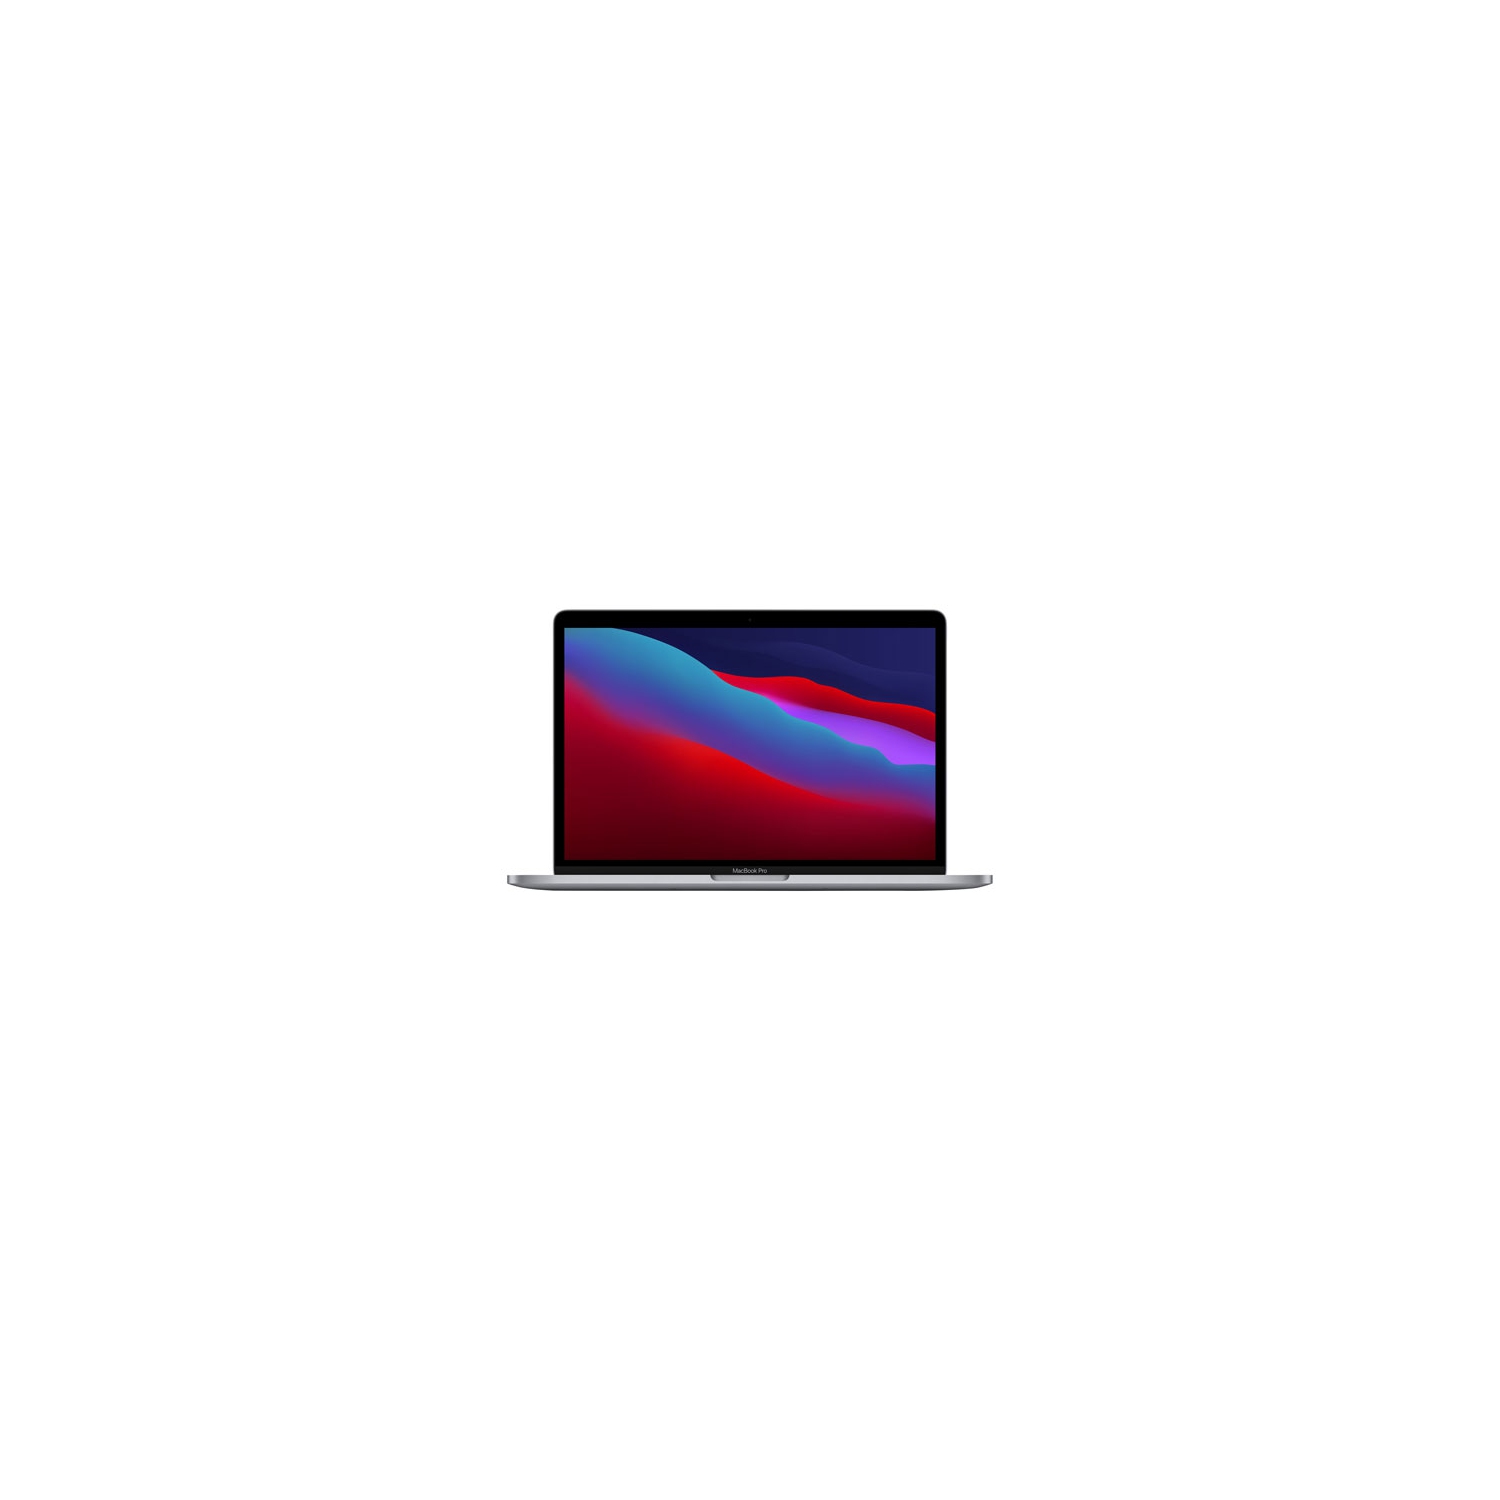 Refurbished (Good) - Apple MacBook Pro 13.3" w/ Touch Bar (Fall 2020) - Space Grey (Apple M1 Chip / 512GB SSD / 16GB RAM)